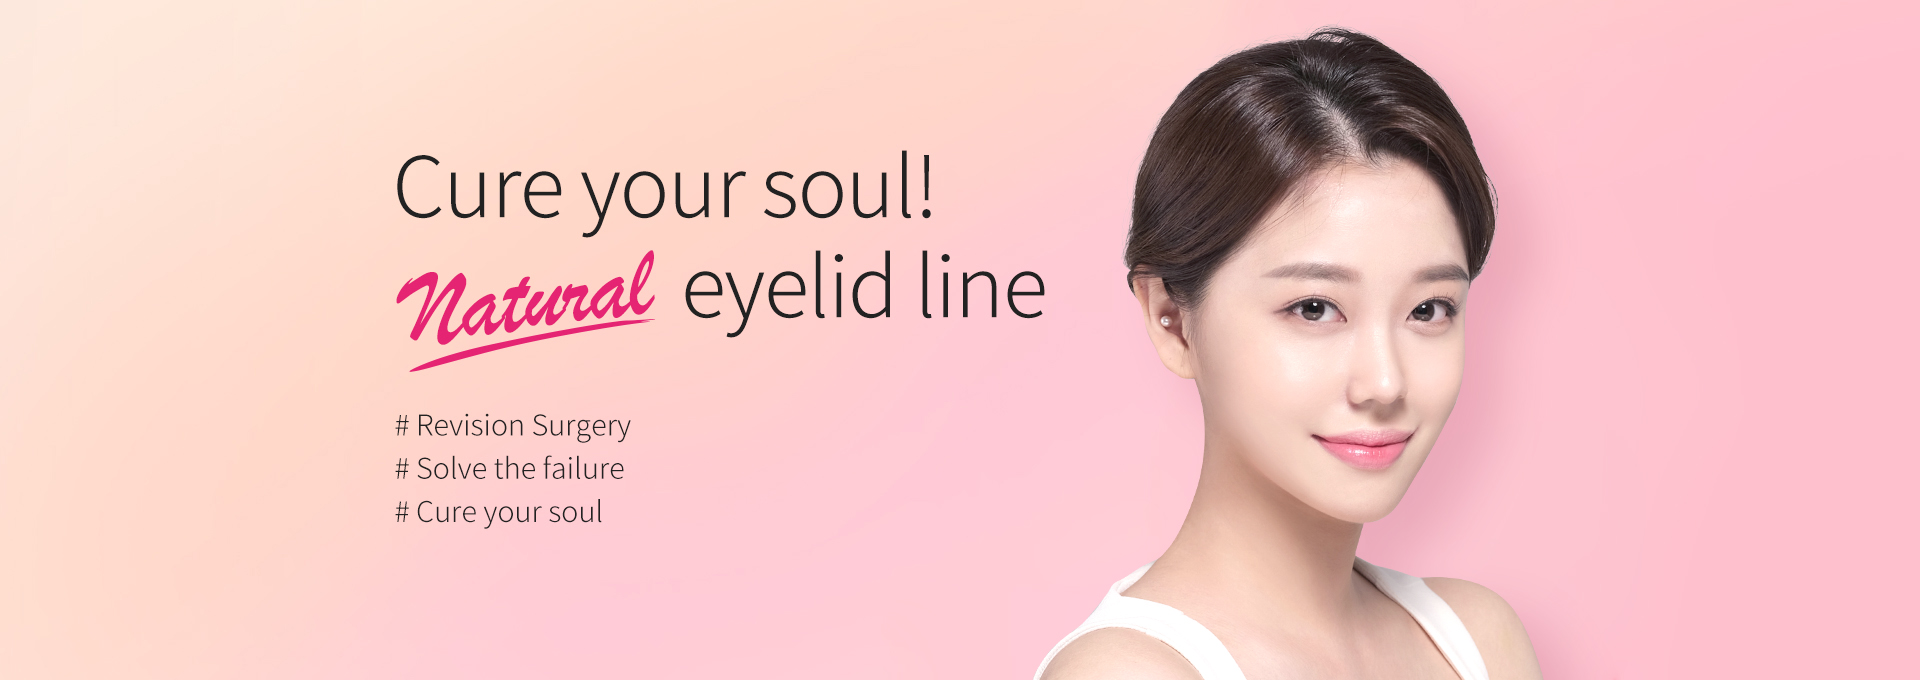 Cure your soul! Natural eyelid line